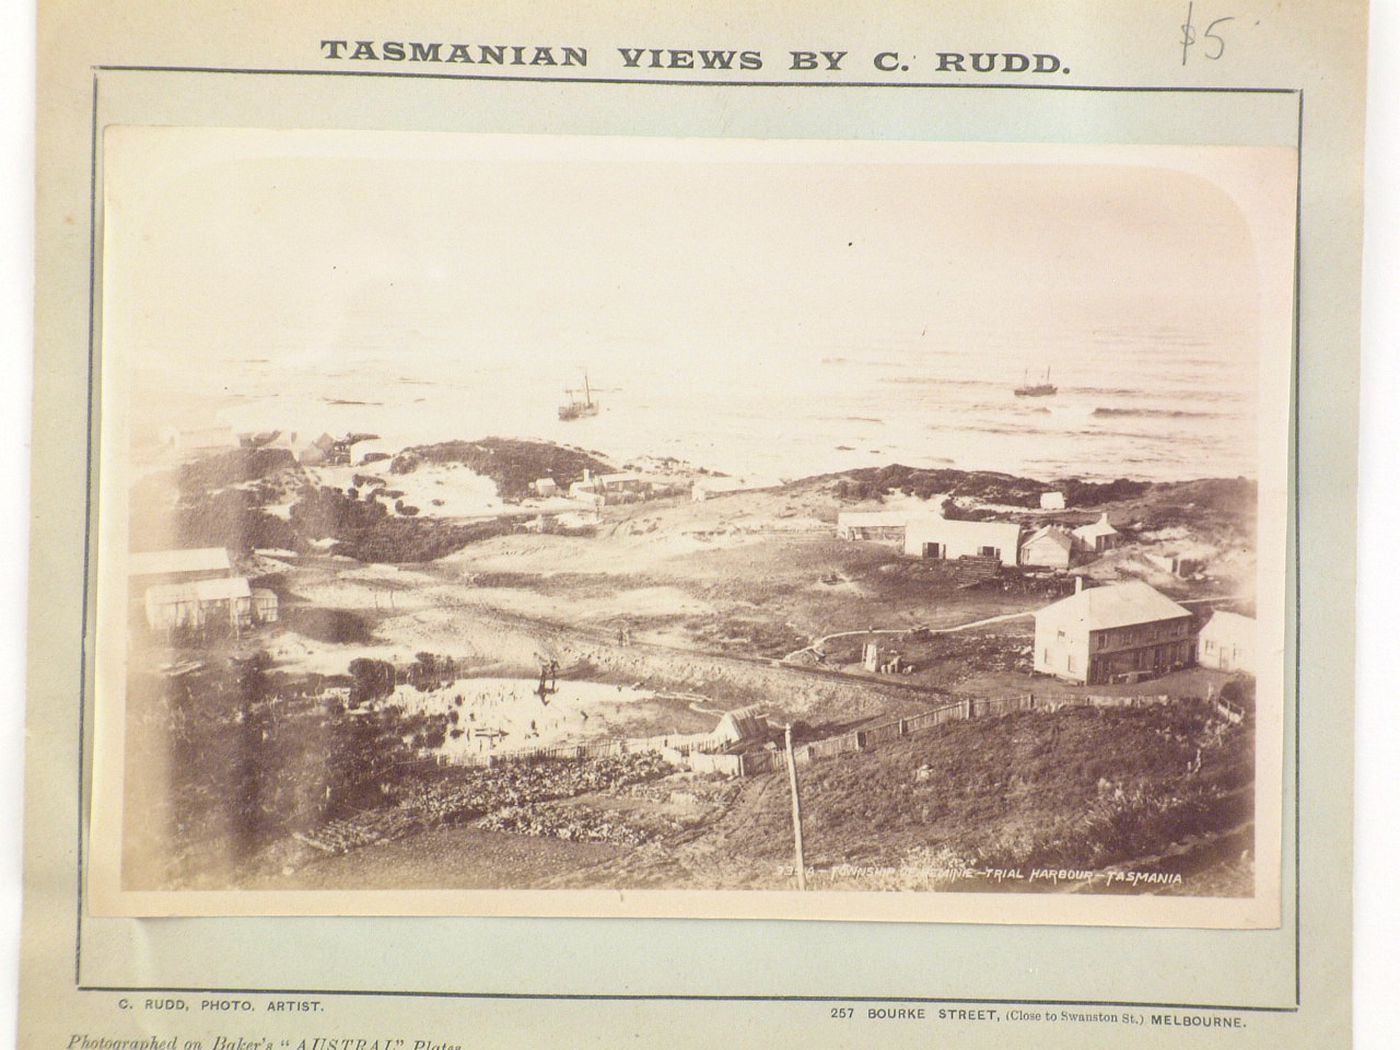 View of Trial Harbour [?] showing a coastal community, Tasmania, Australia